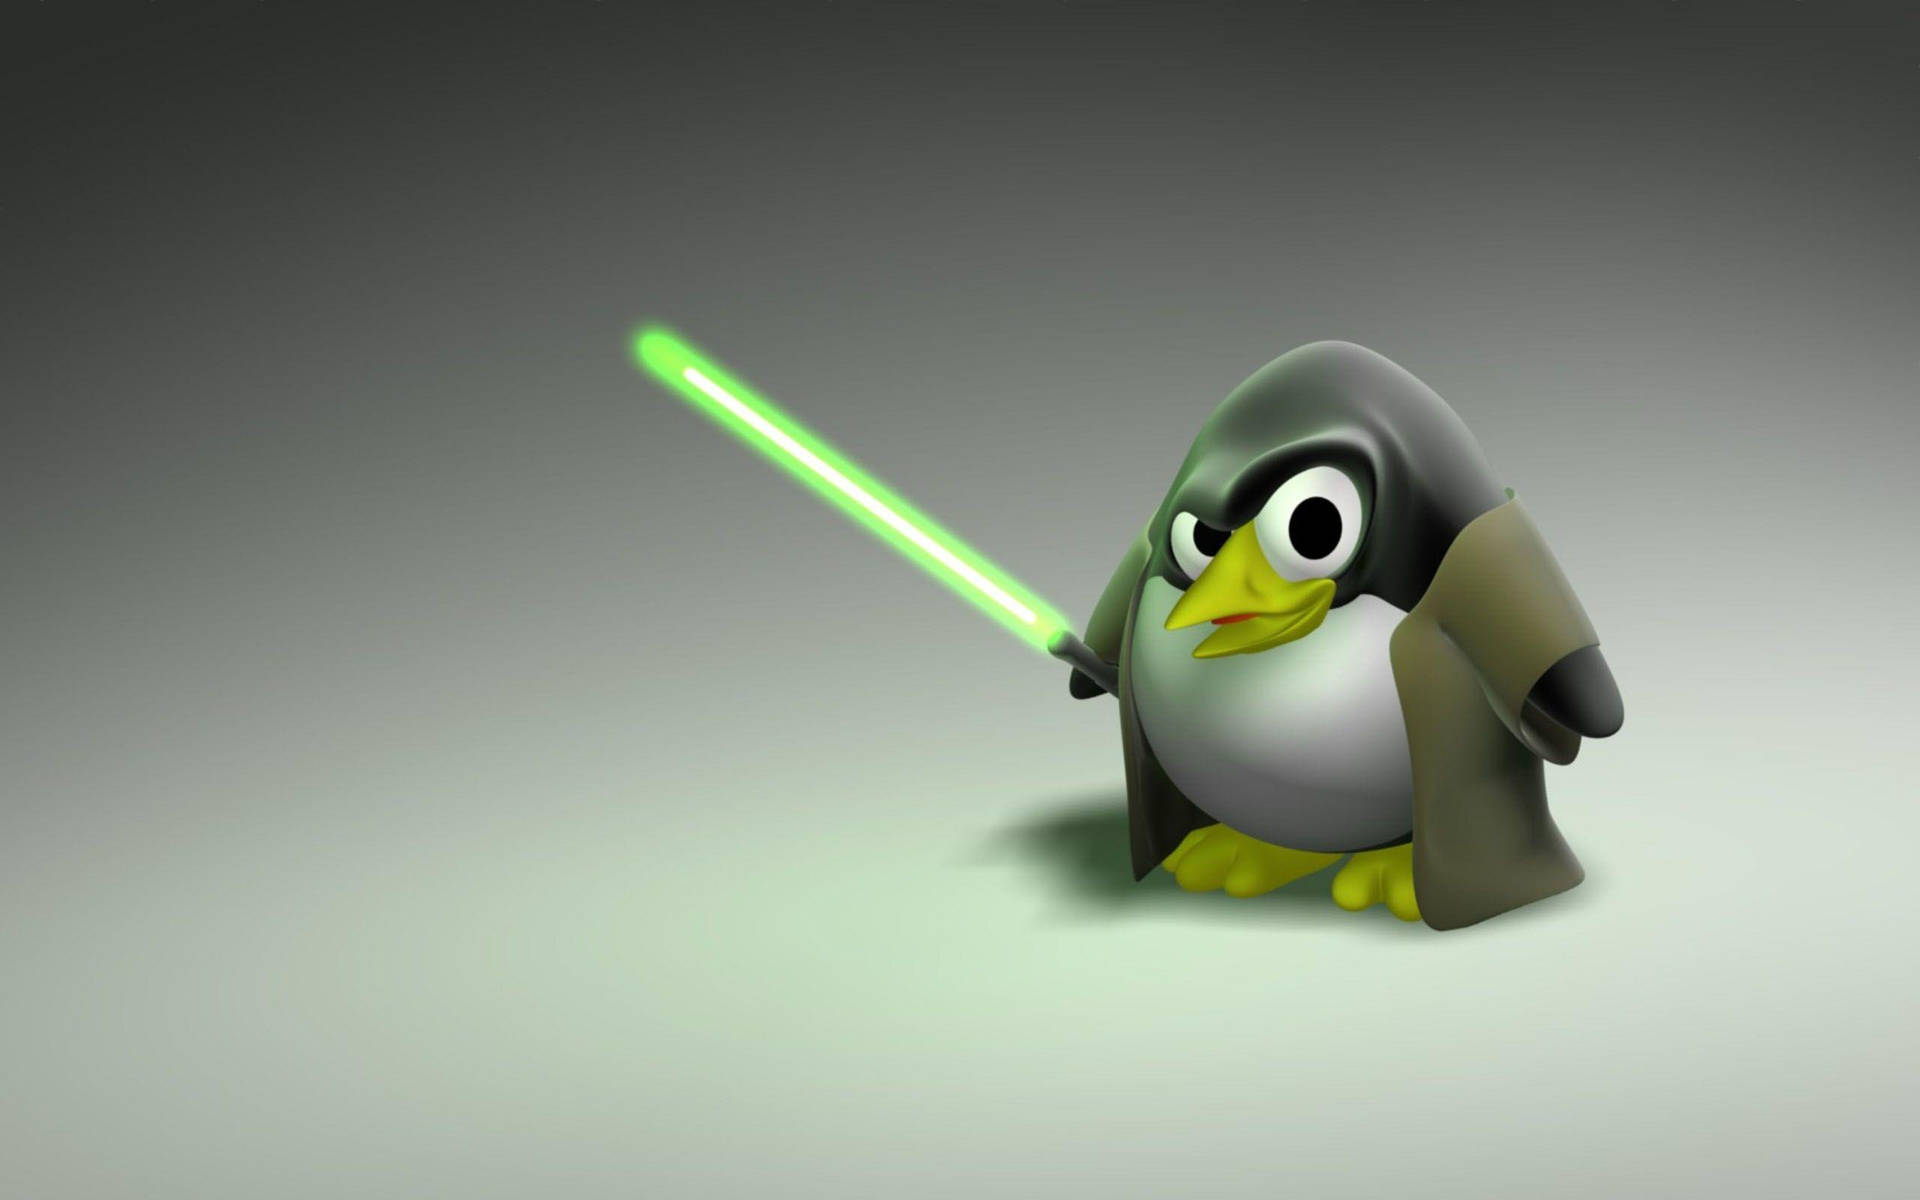 Star Wars Theme Tux Official Linux Desktop Wallpaper